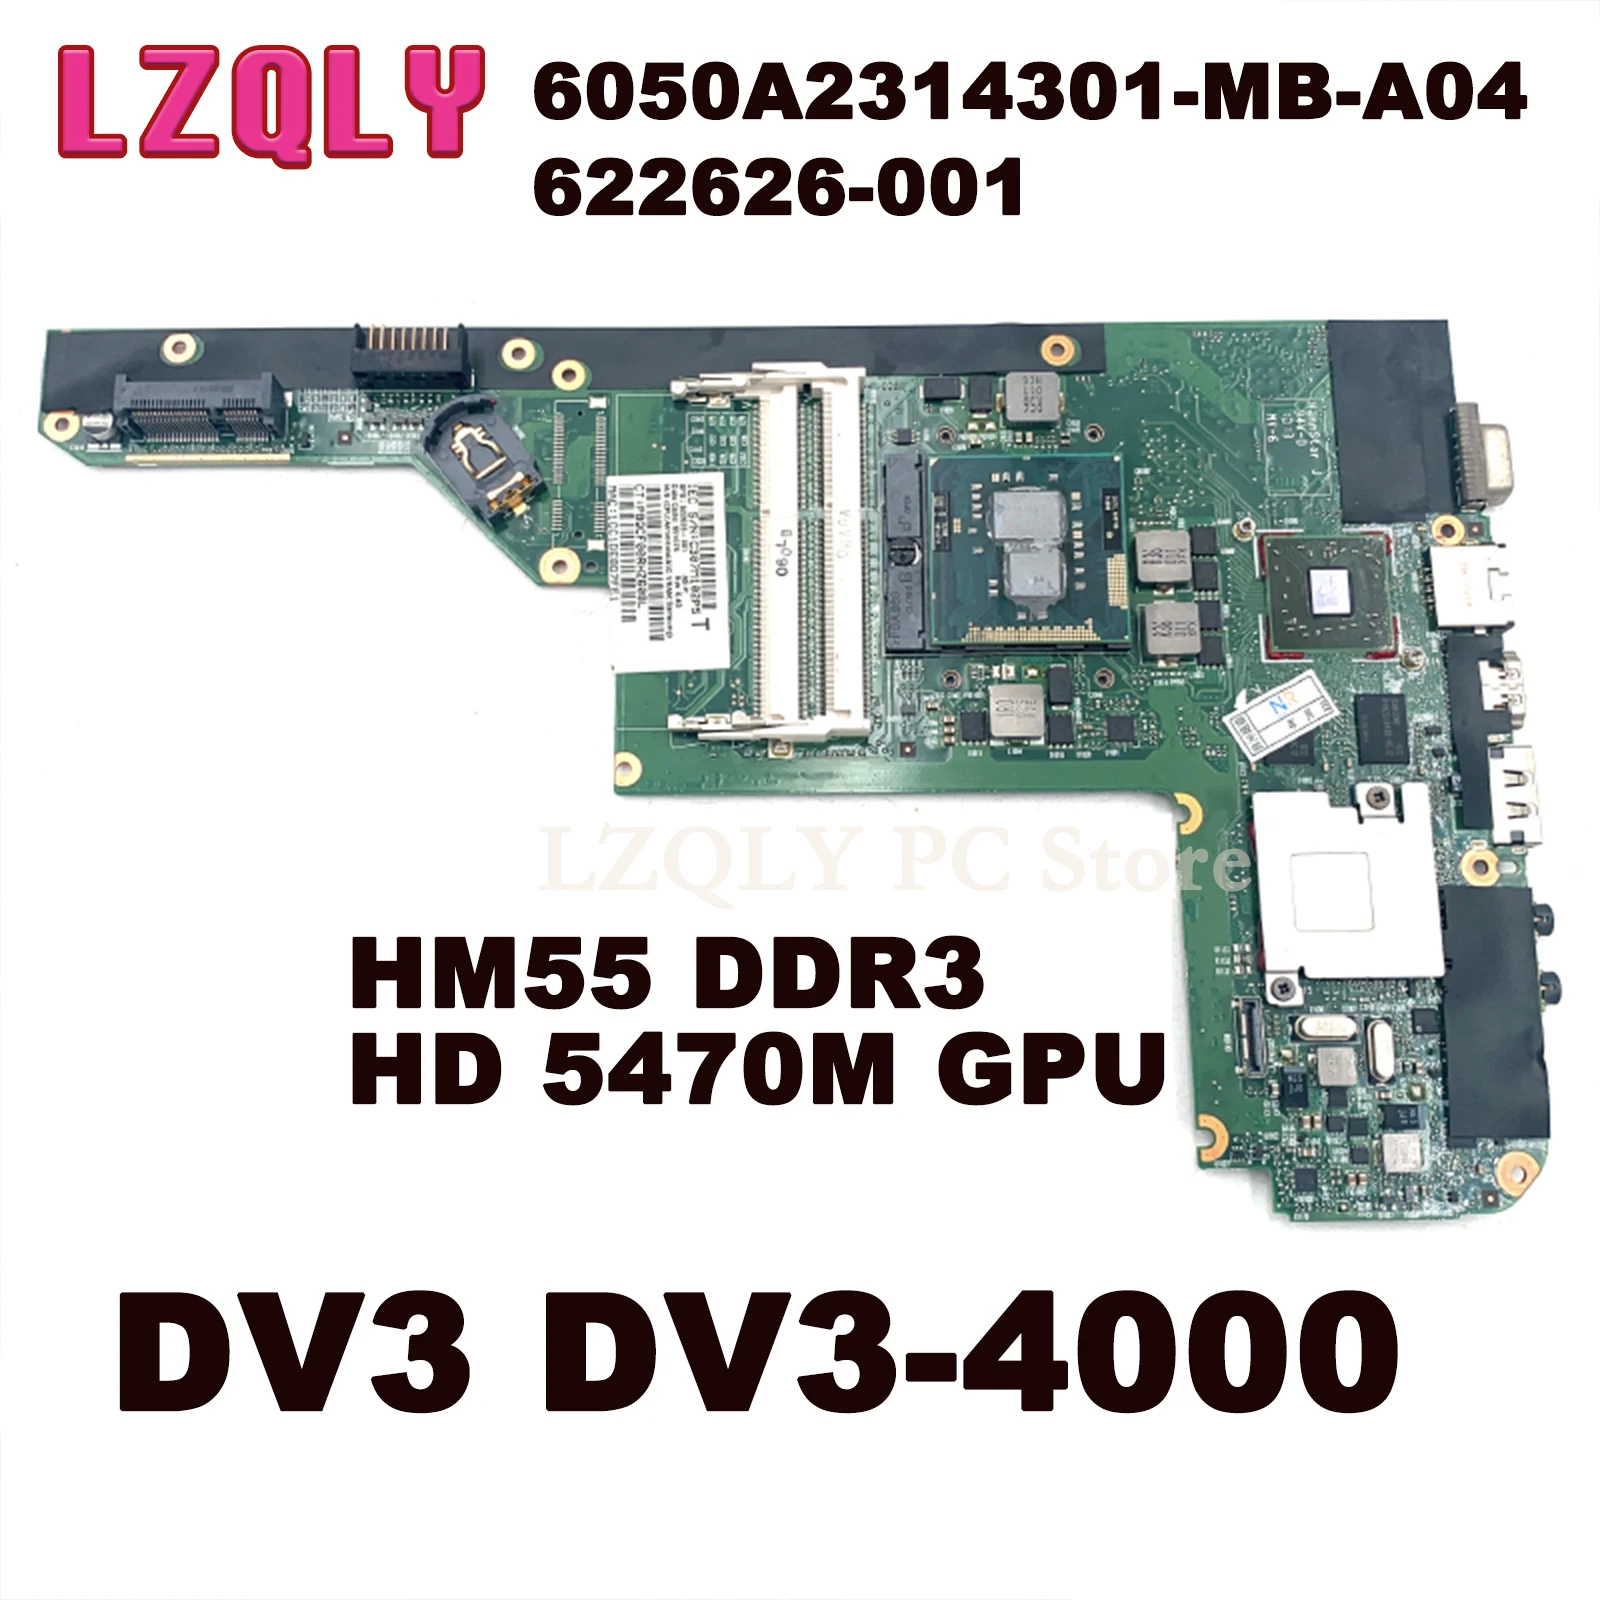 LZQLY 6050A2314301-MB-A04 622626-001 for HP DV3 DV3-4000 laptop motherboard HM55 DDR3 HD 5470M GPU free CPU main board